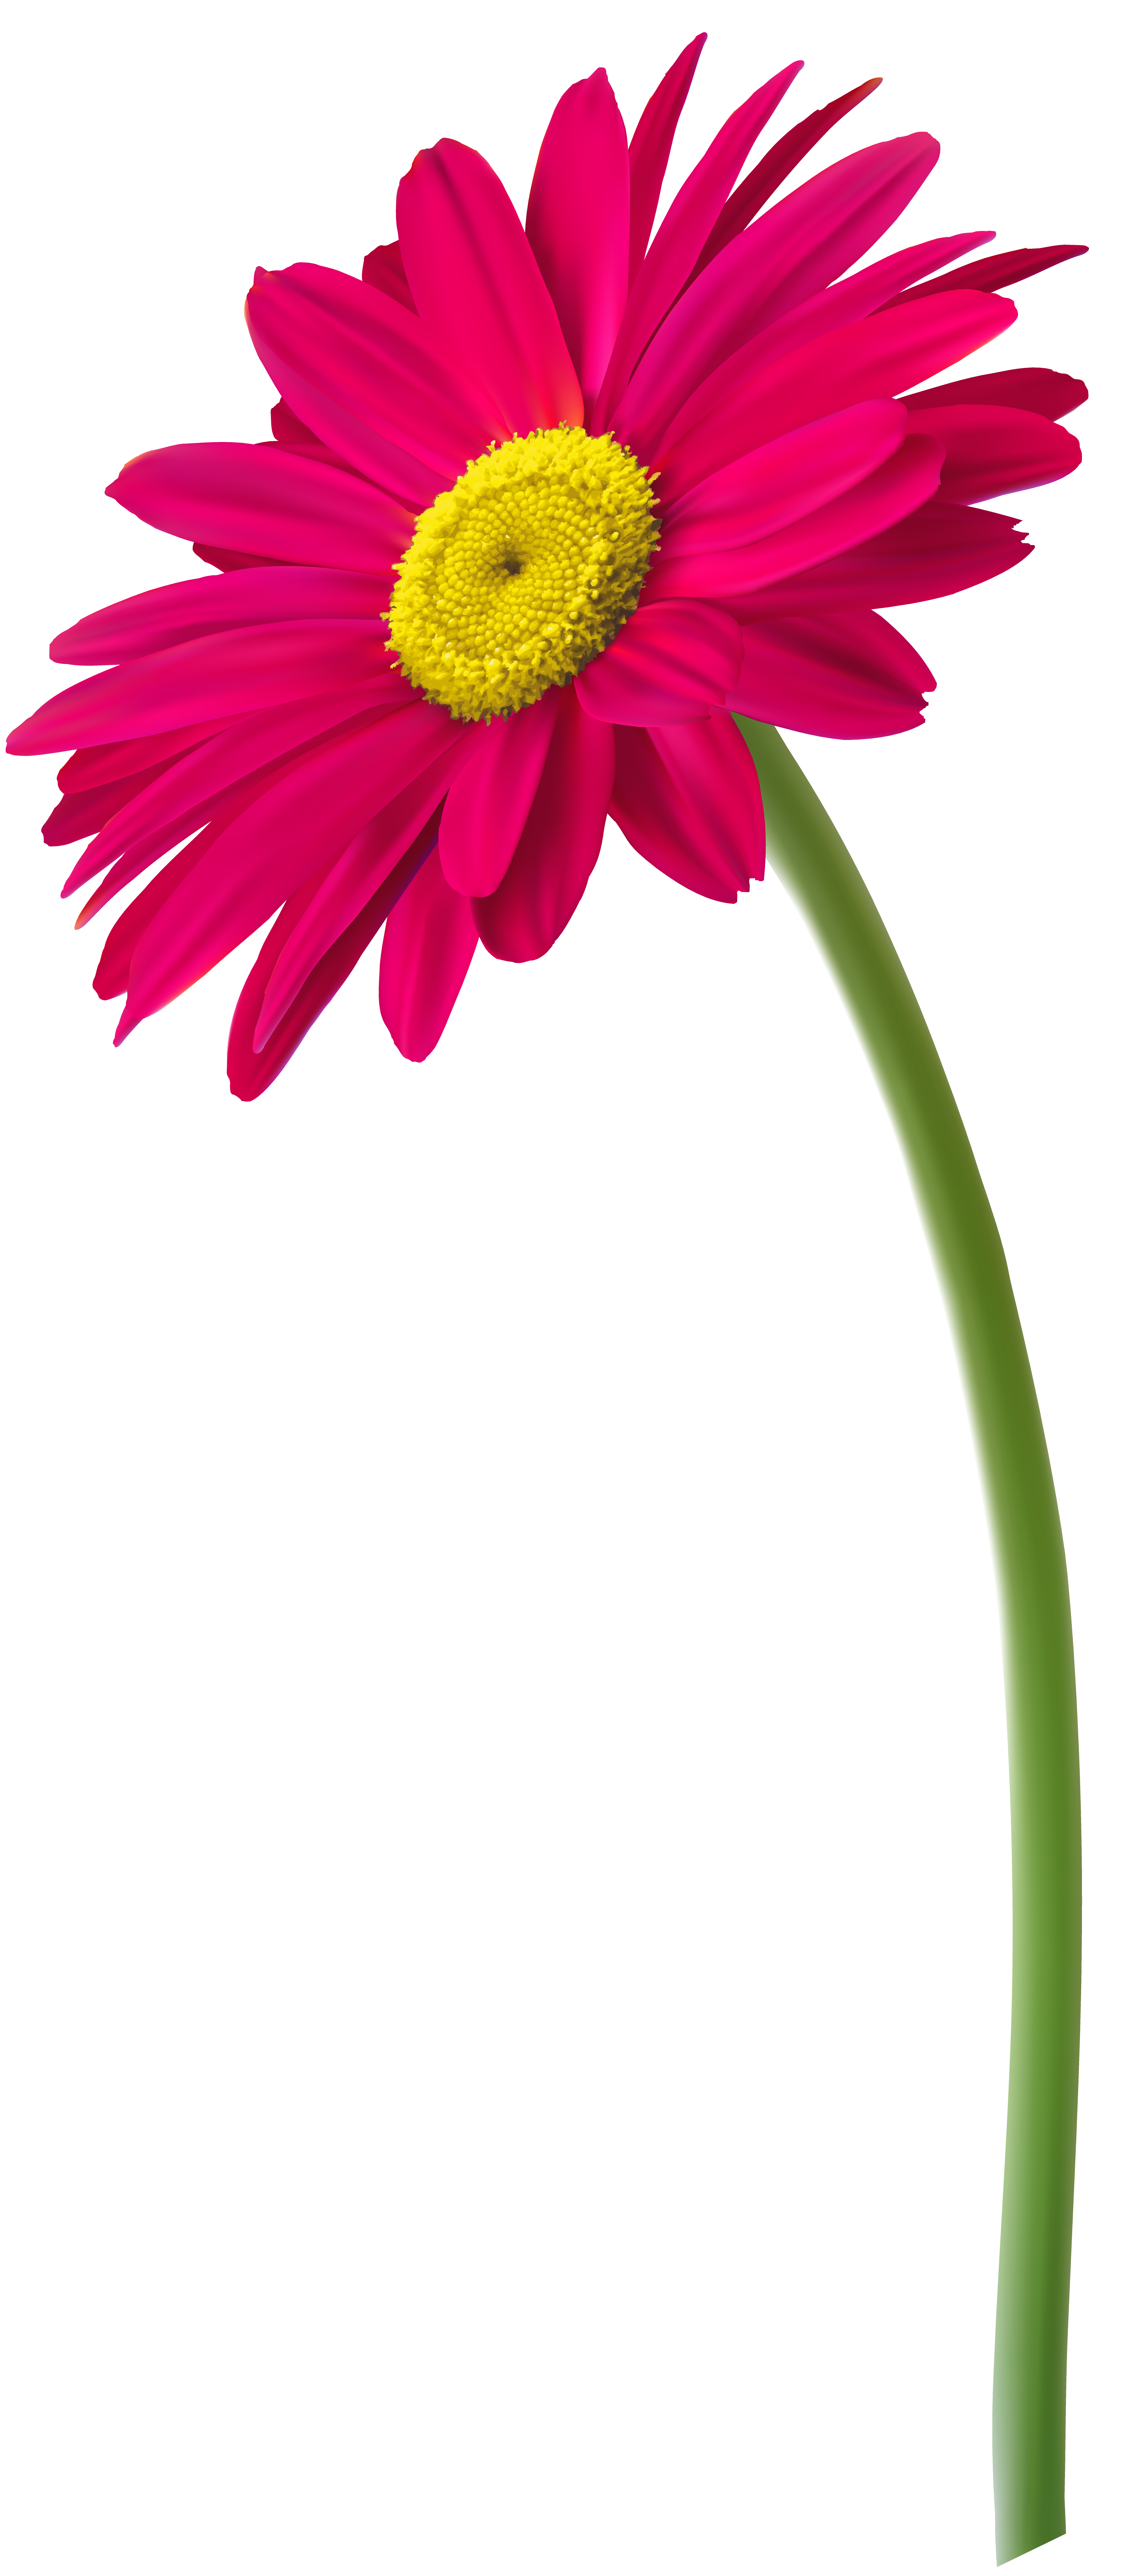 Pink Gerbera Flower PNG Clip Art Image | Gallery Yopriceville ...